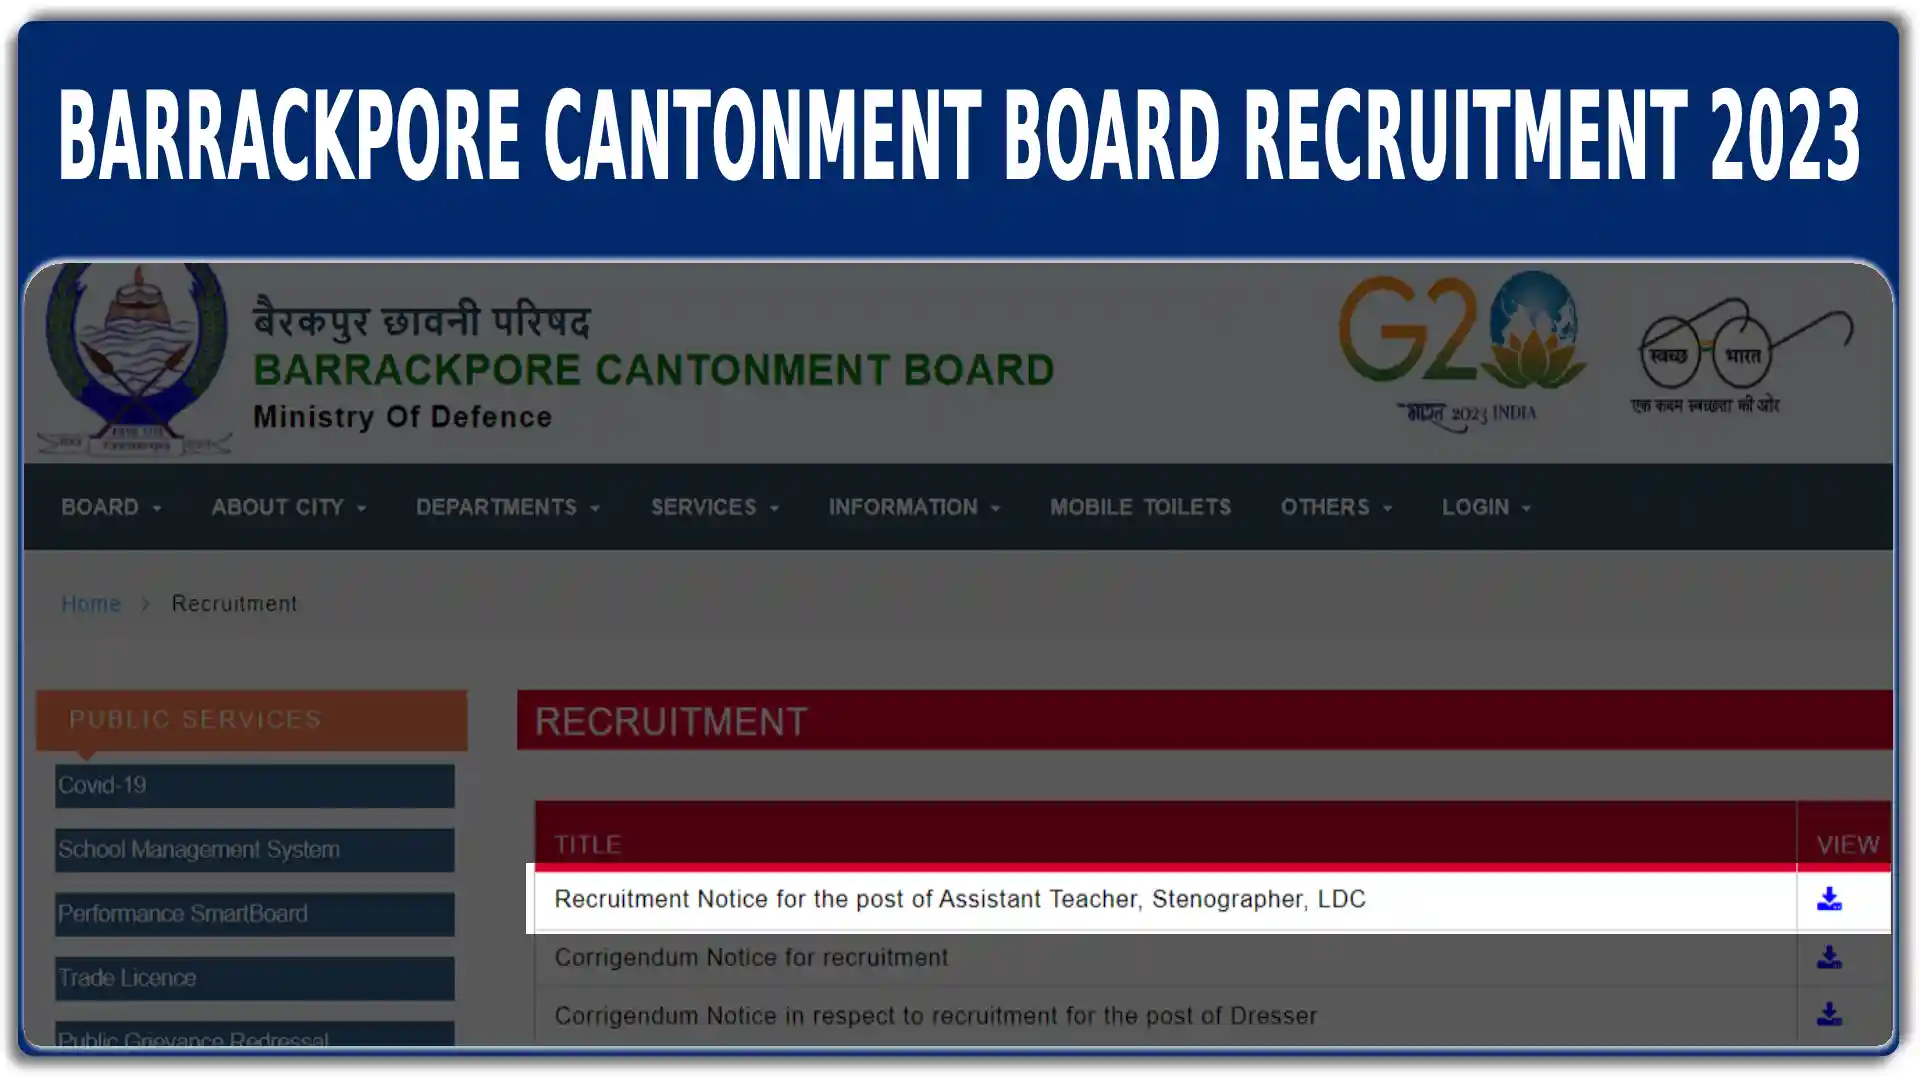 Barrackpore Cantonment Board Recruitment 2023 Notification